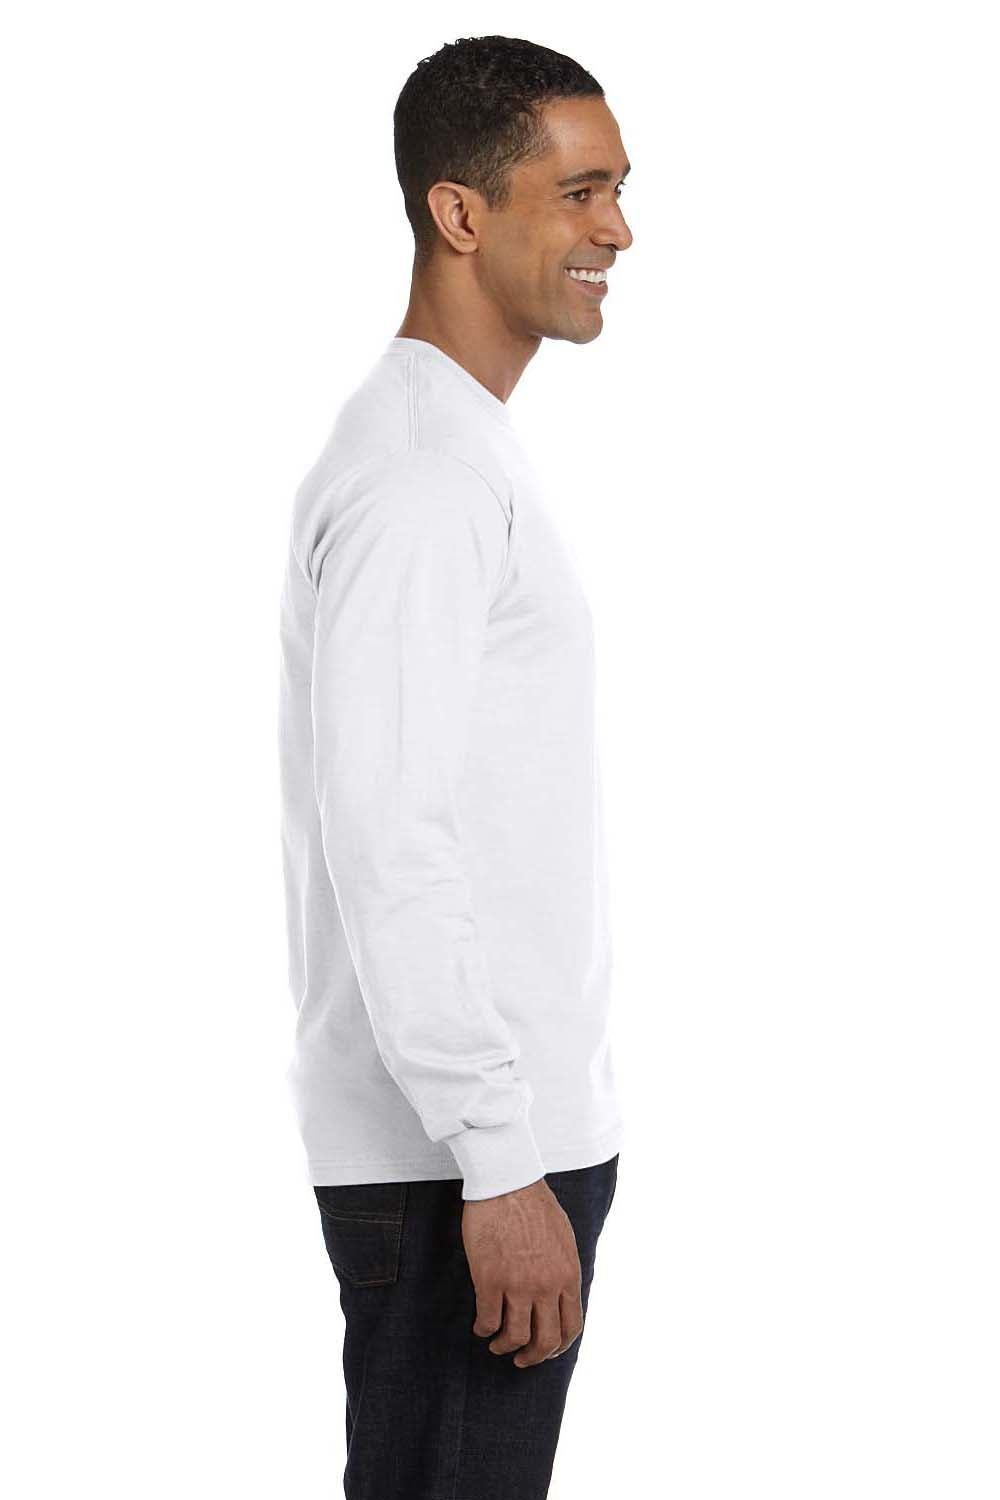 Hanes 5186 Mens Beefy-T Long Sleeve Crewneck T-Shirt White Side